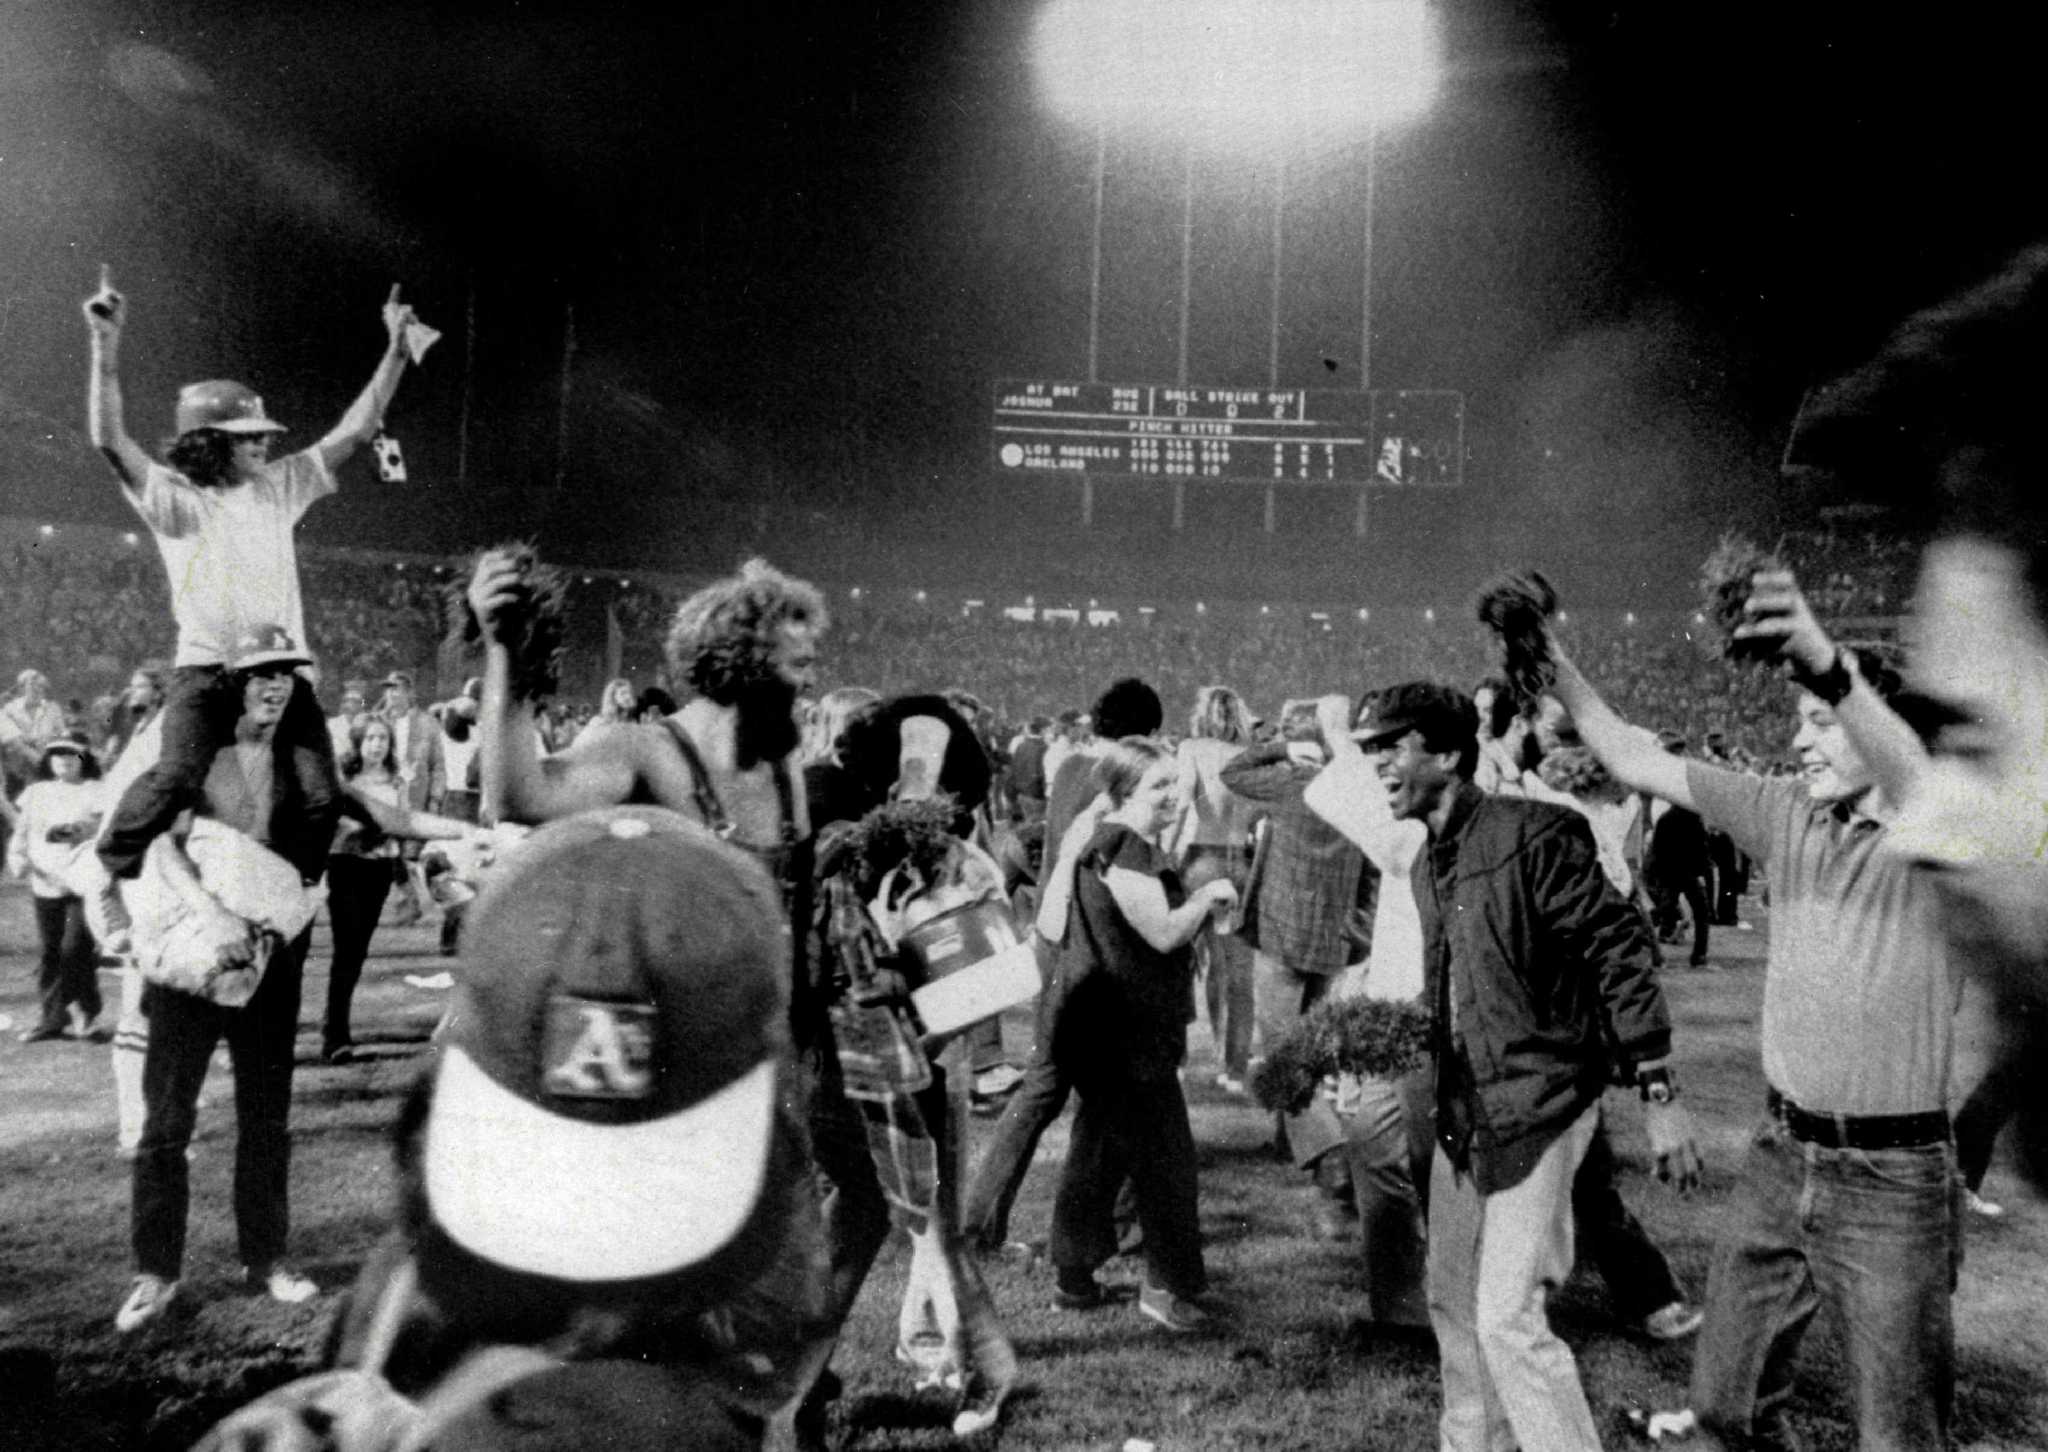 Oakland gave the 1974 A's a 'bonkers' championship celebration